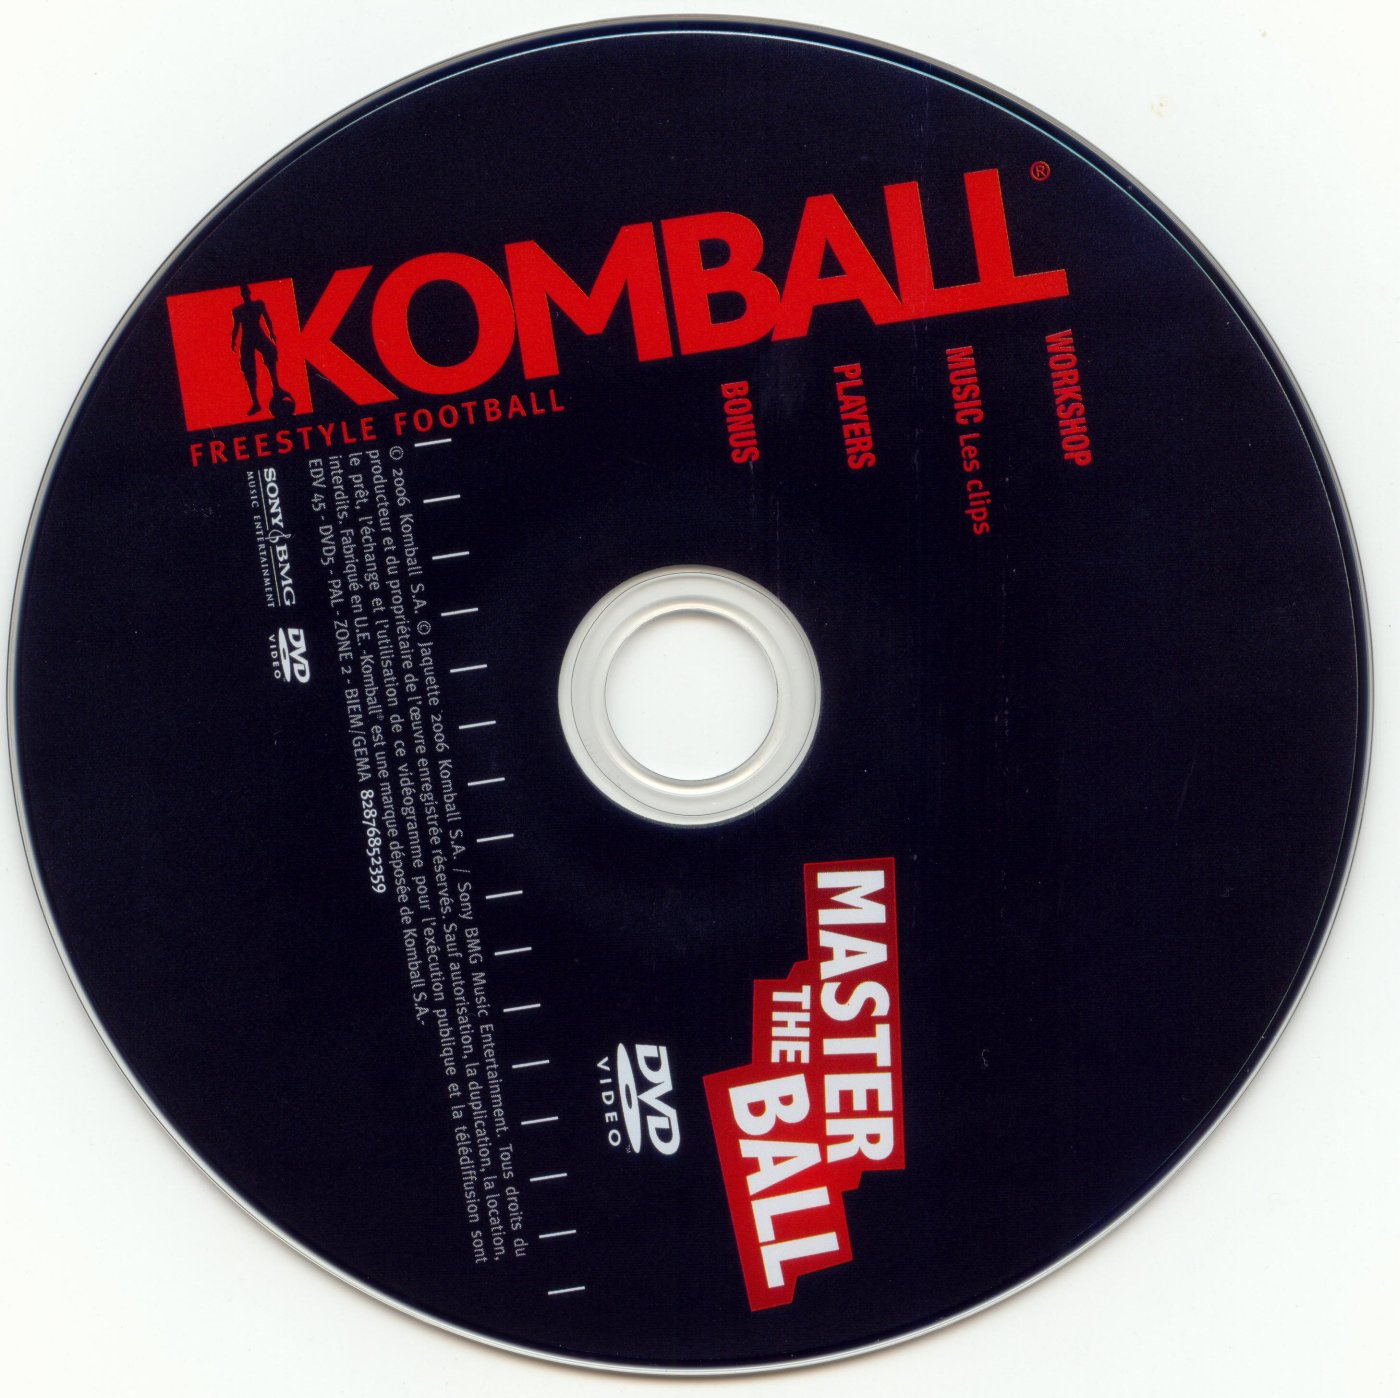 Komball Master the ball